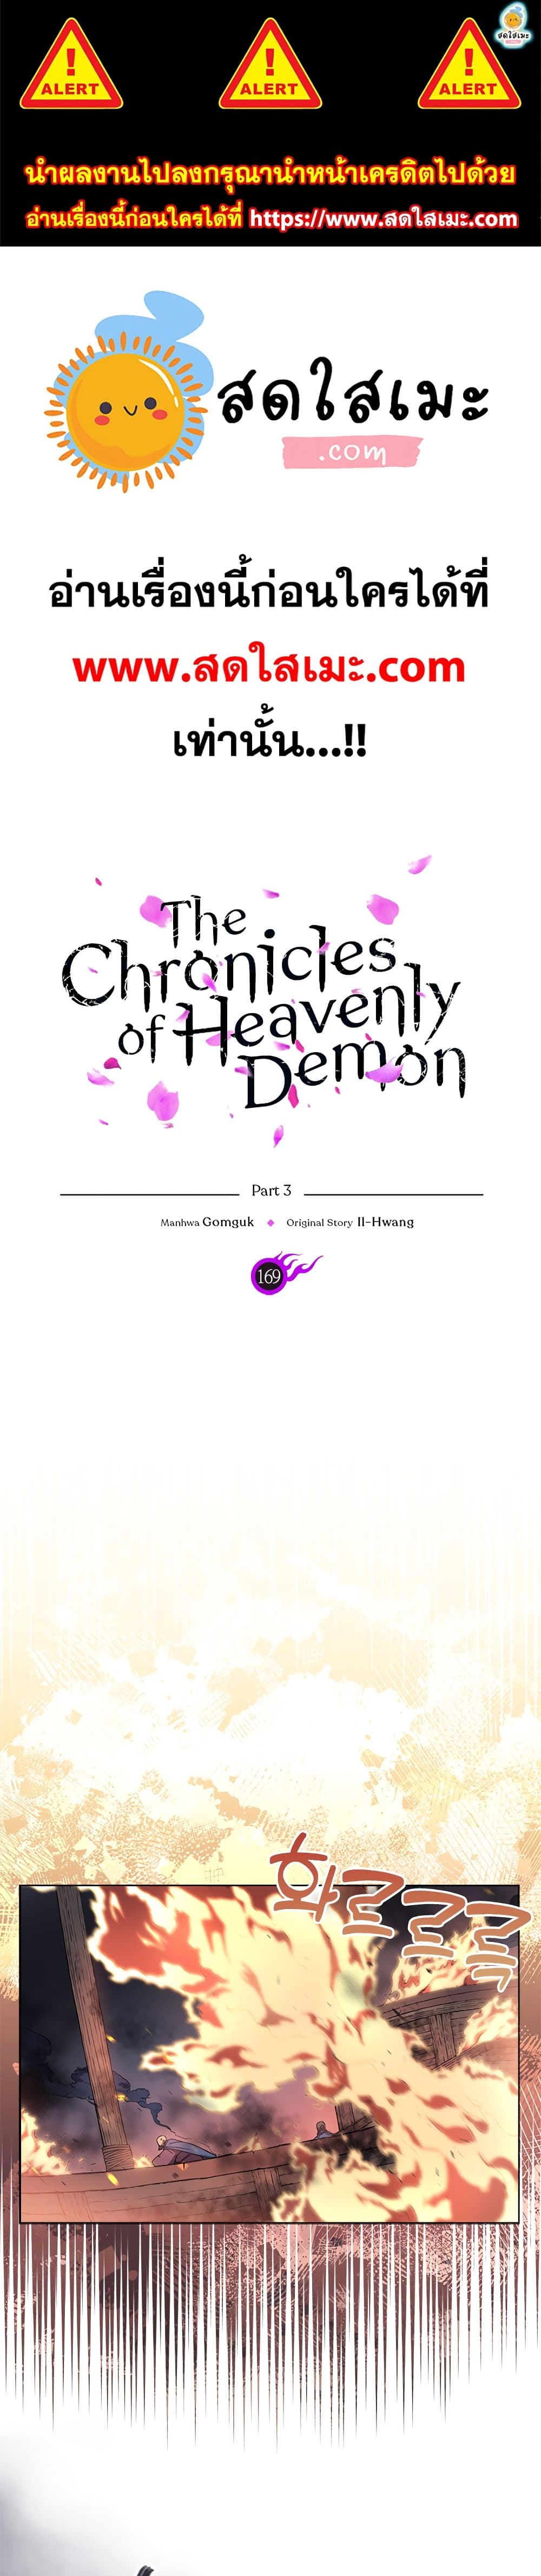 Chronicles of Heavenly Demon169 01